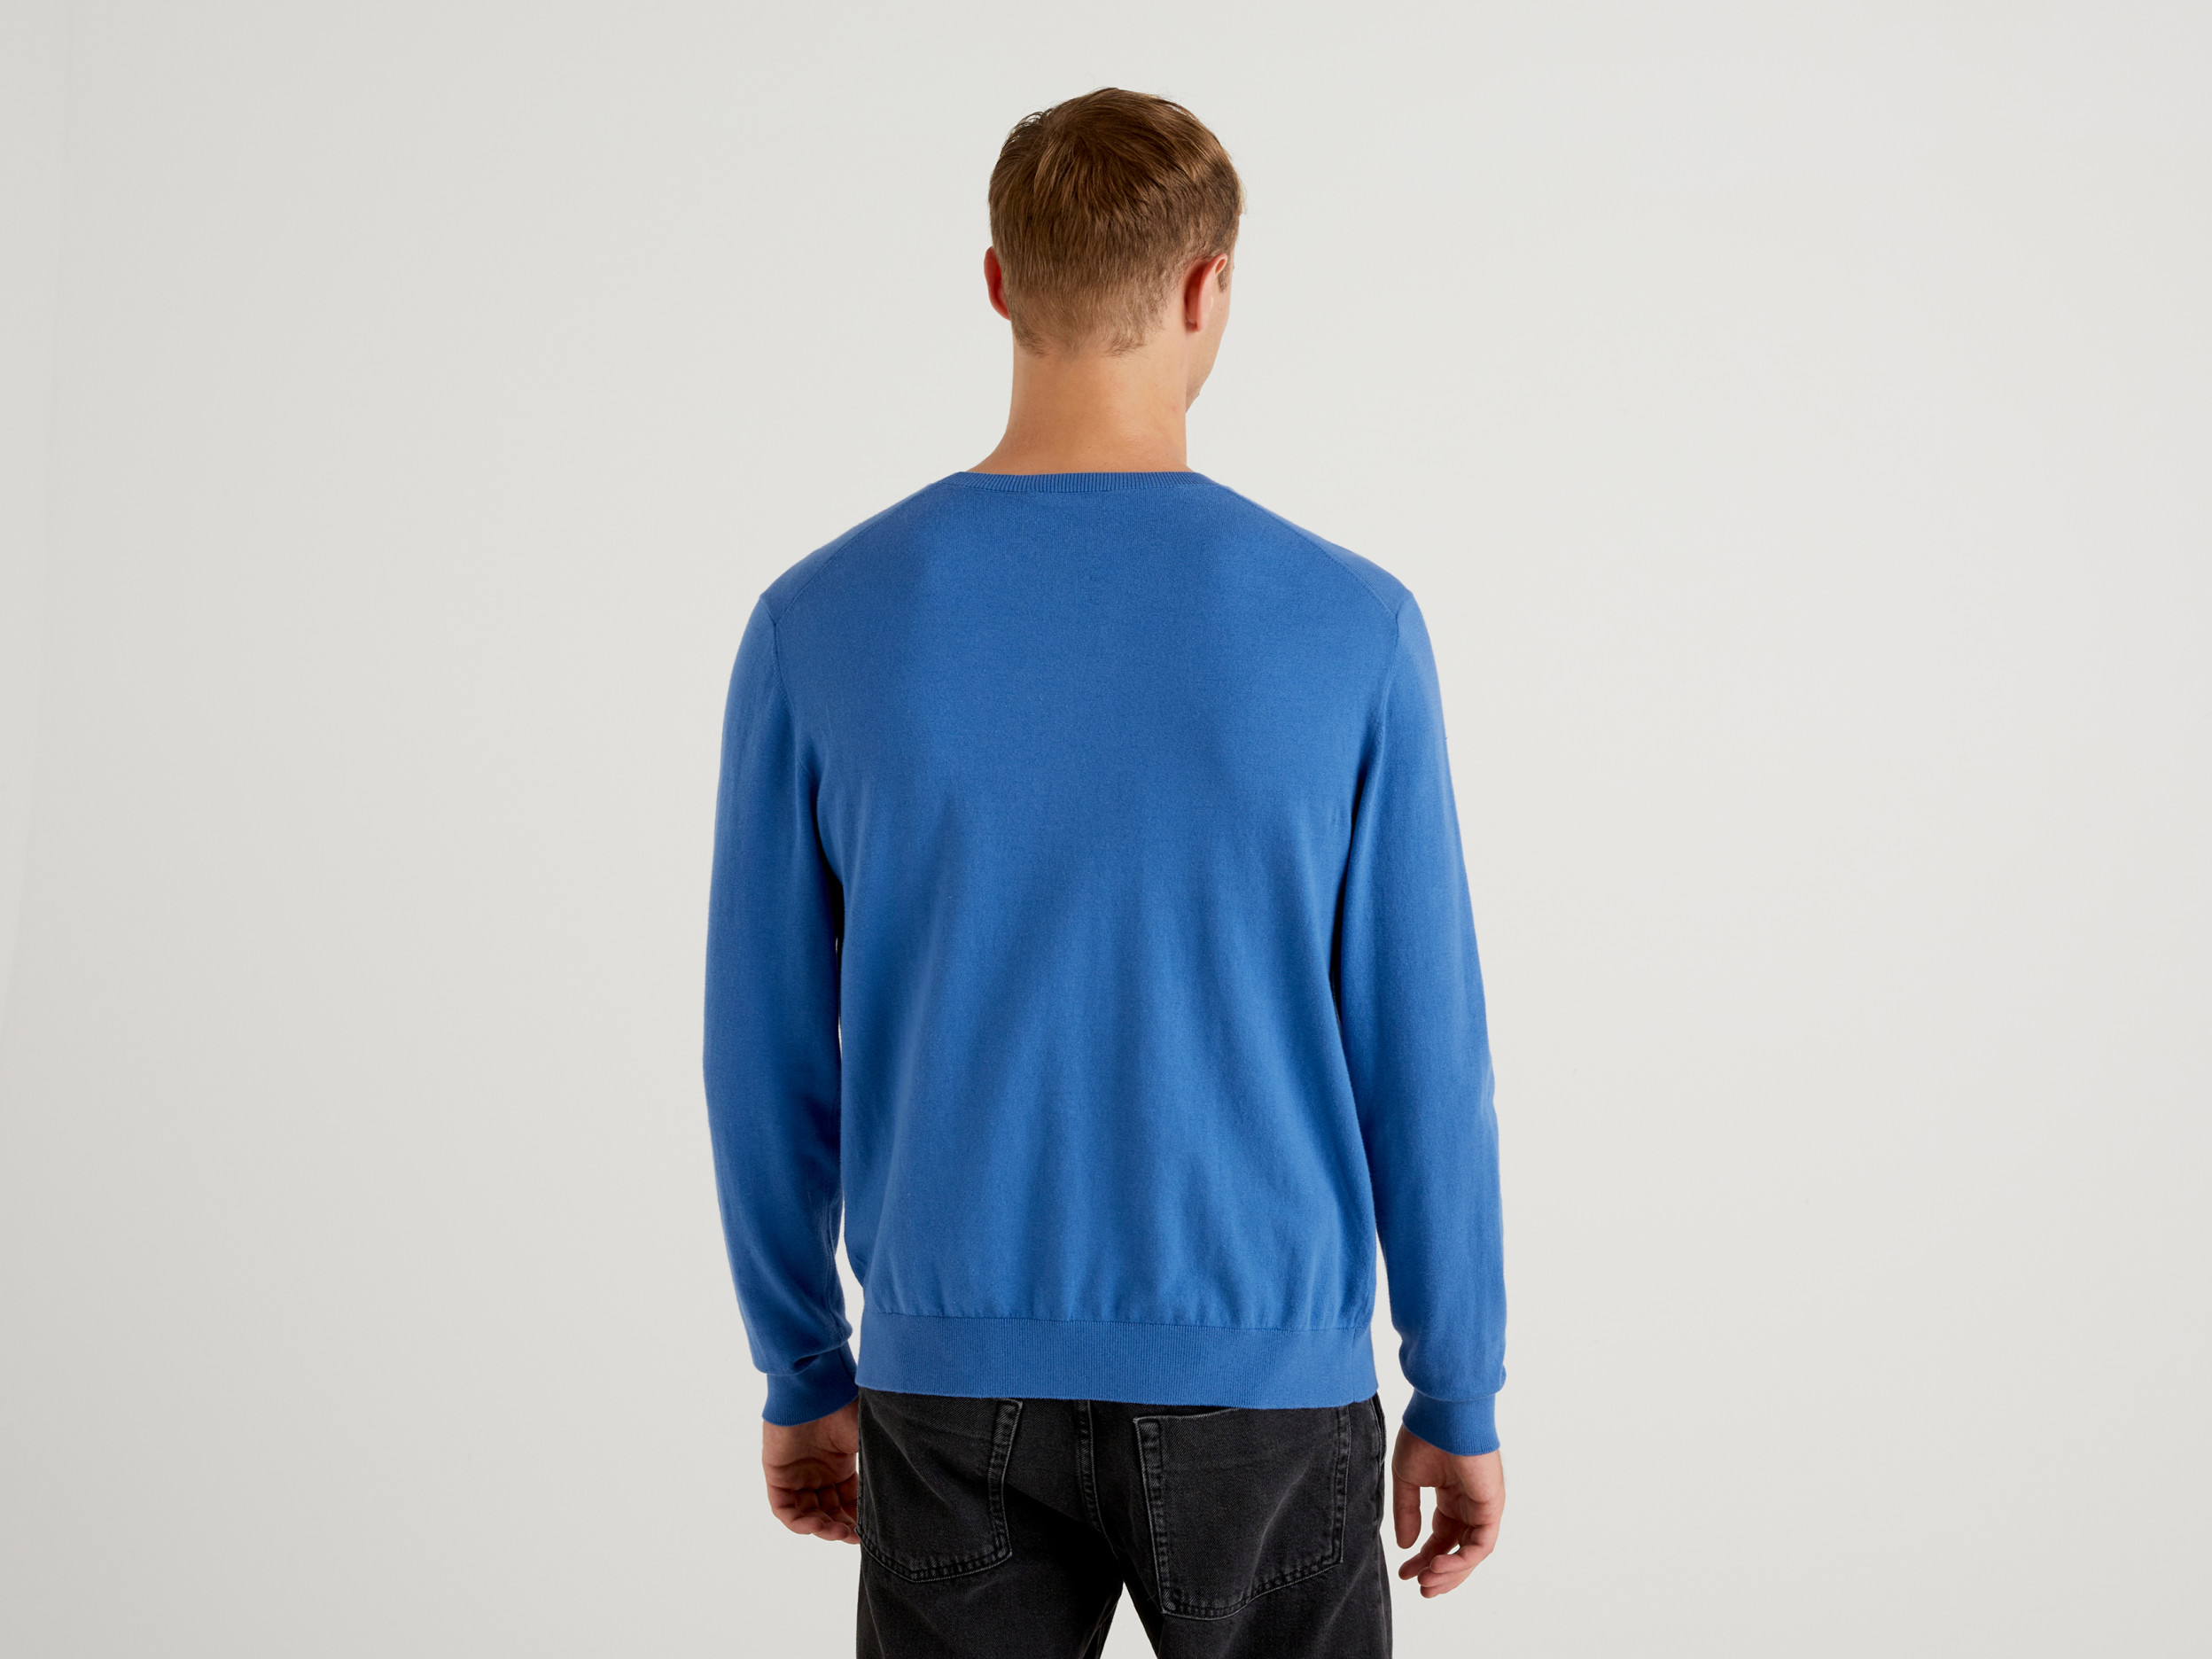 Benetton, Crew Neck Sweater In Lightweight Cotton Blend, Taglia Xxl, Bright Blue, Men